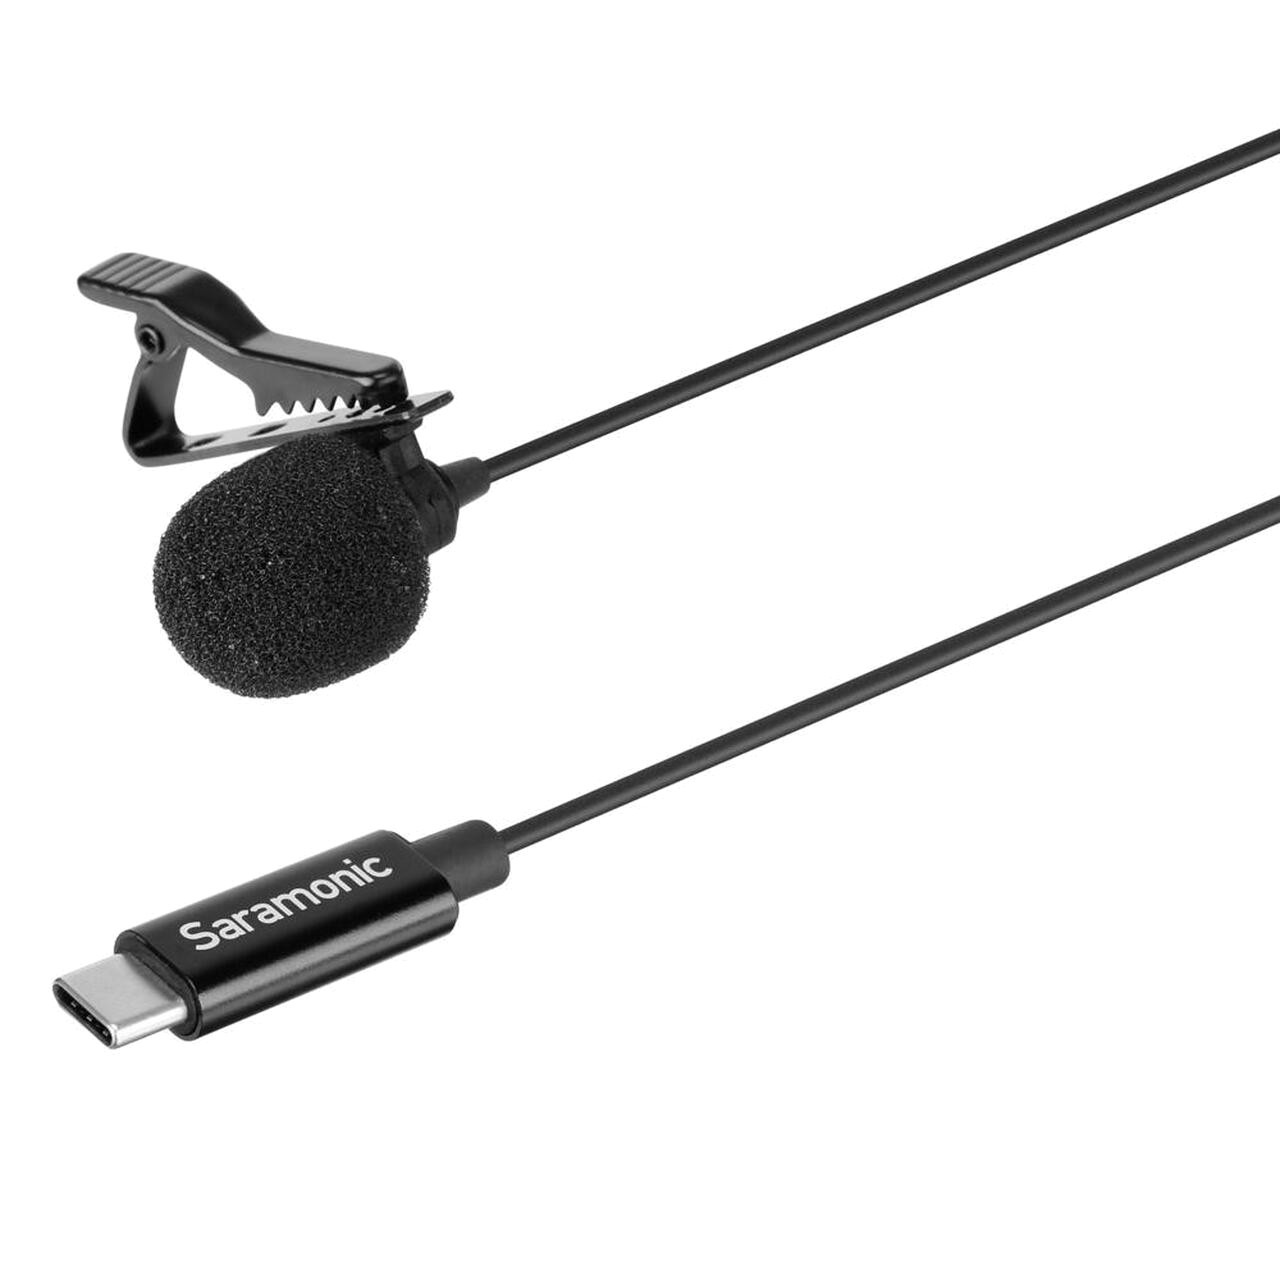 Shure MVL-3.5MM Lavalier Microphone - Sound Productions